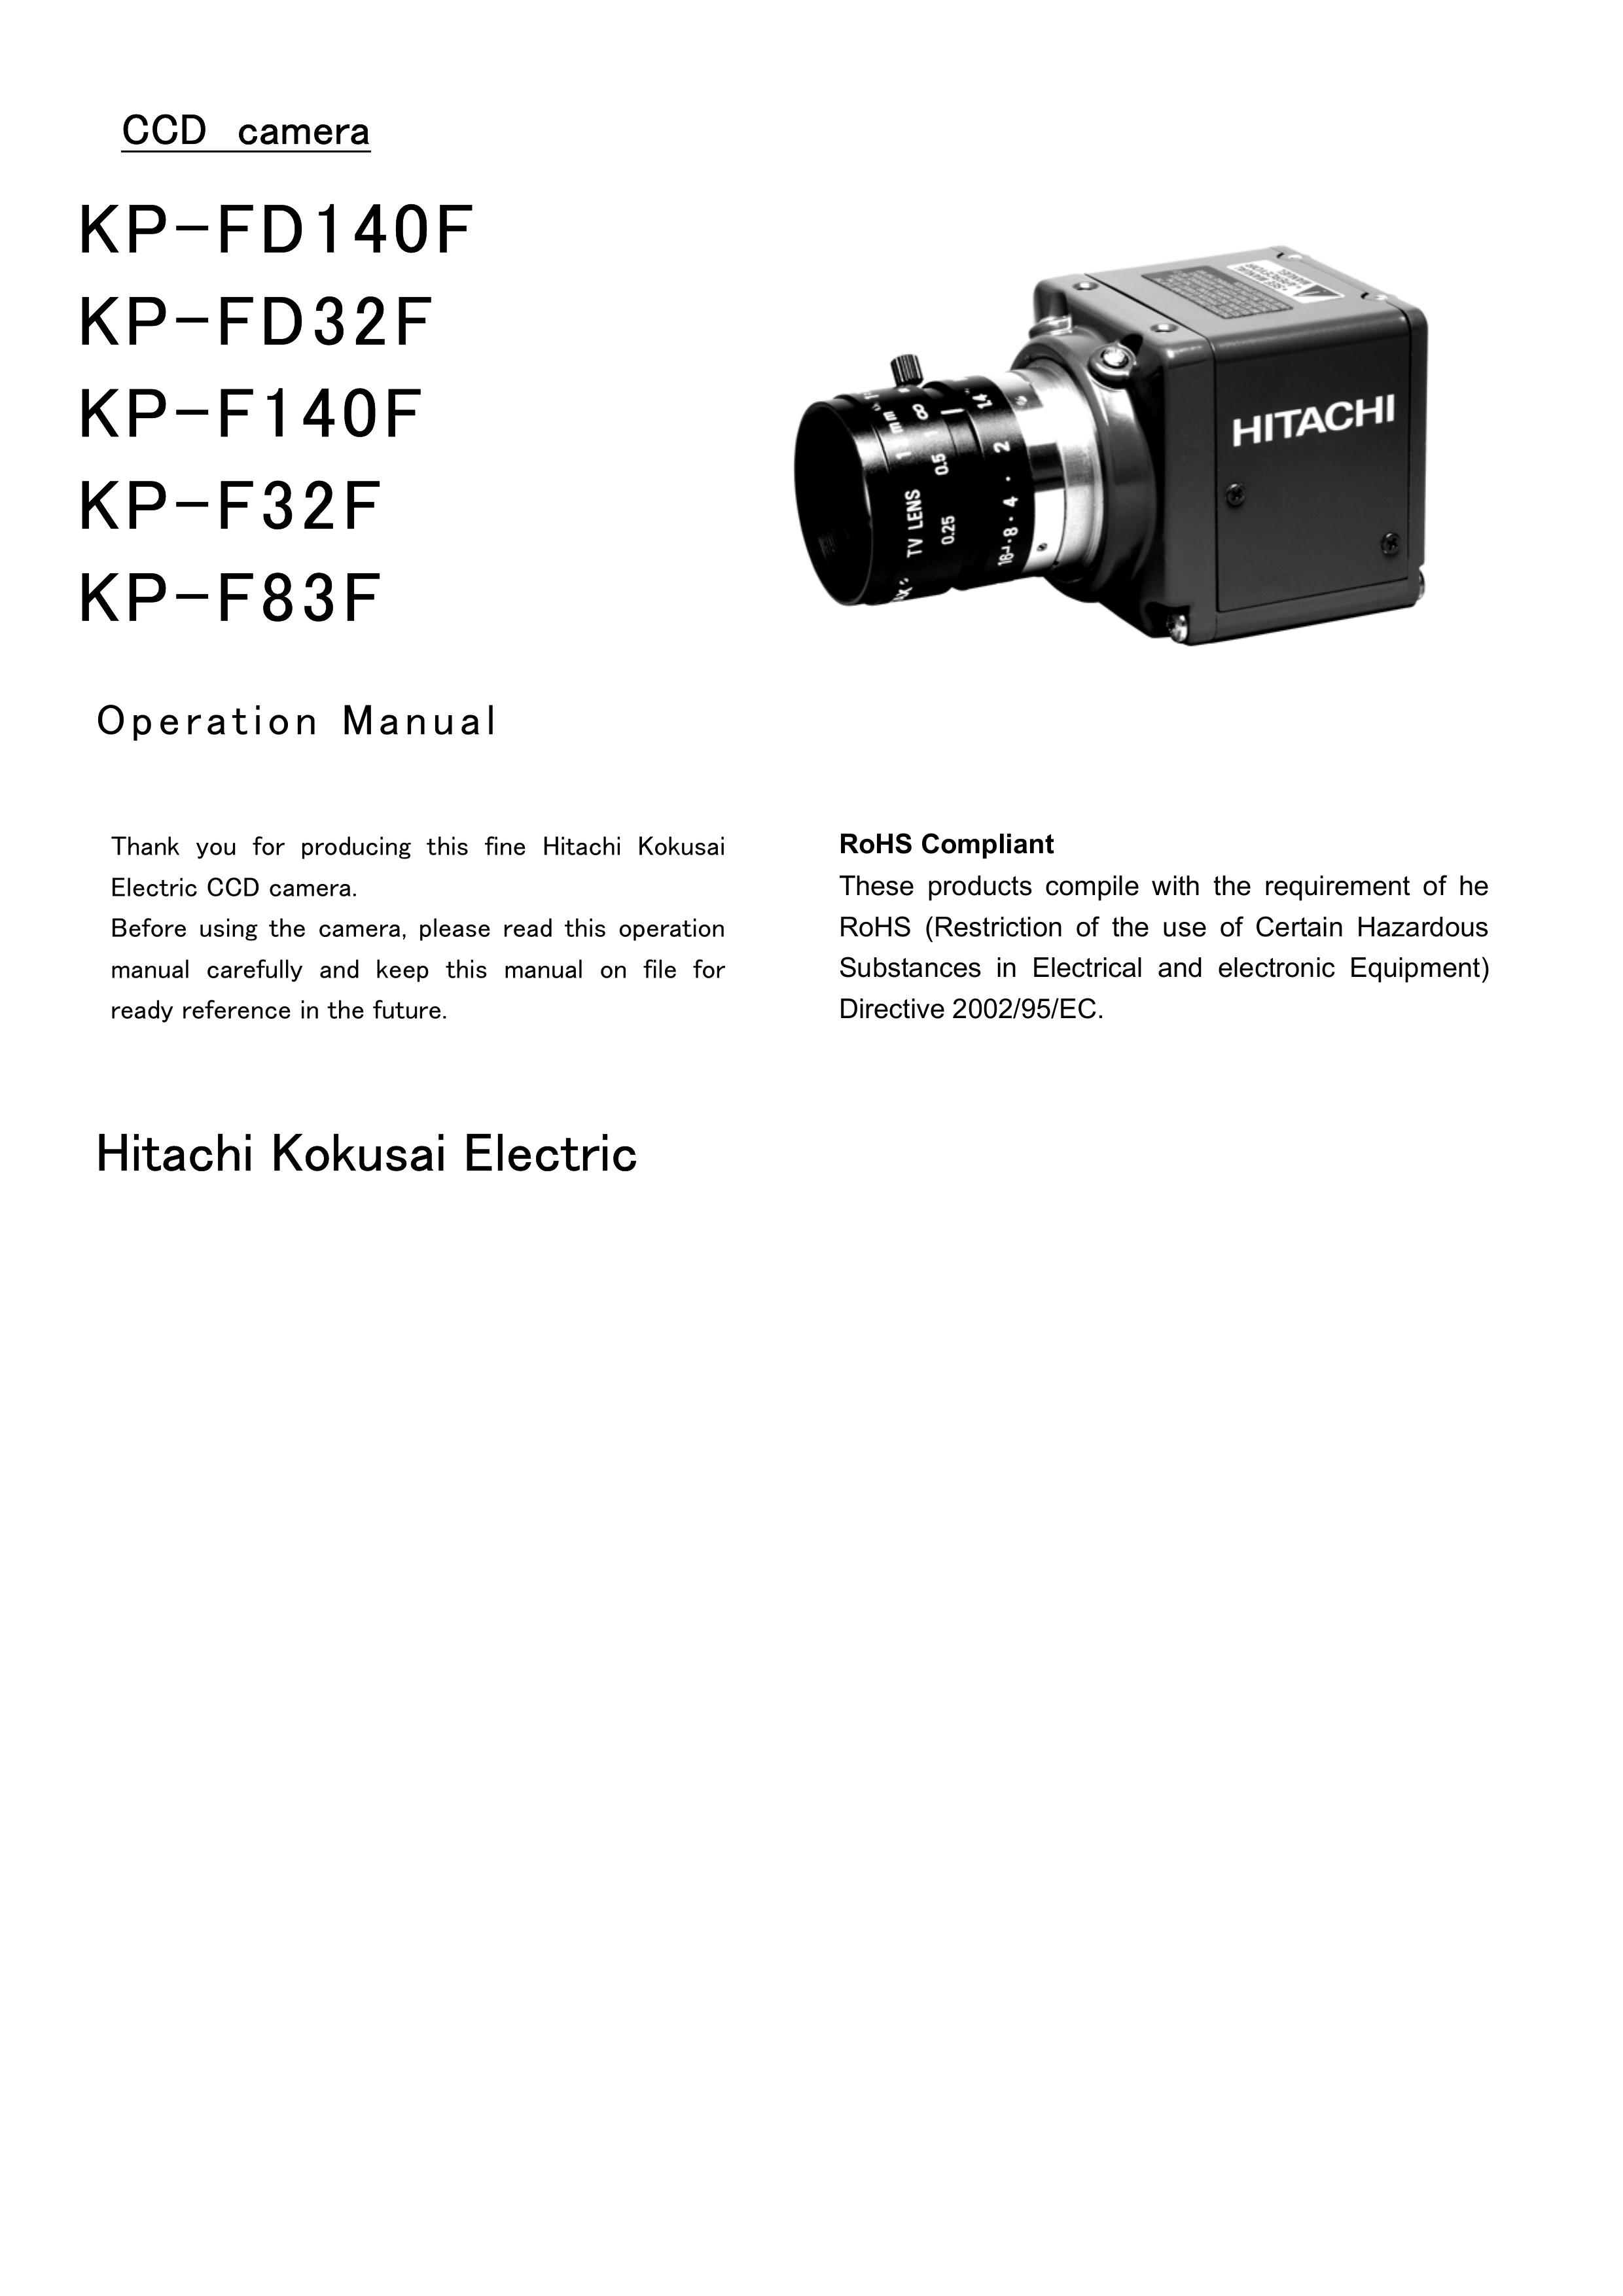 Hitachi KP-FD32F Digital Camera User Manual